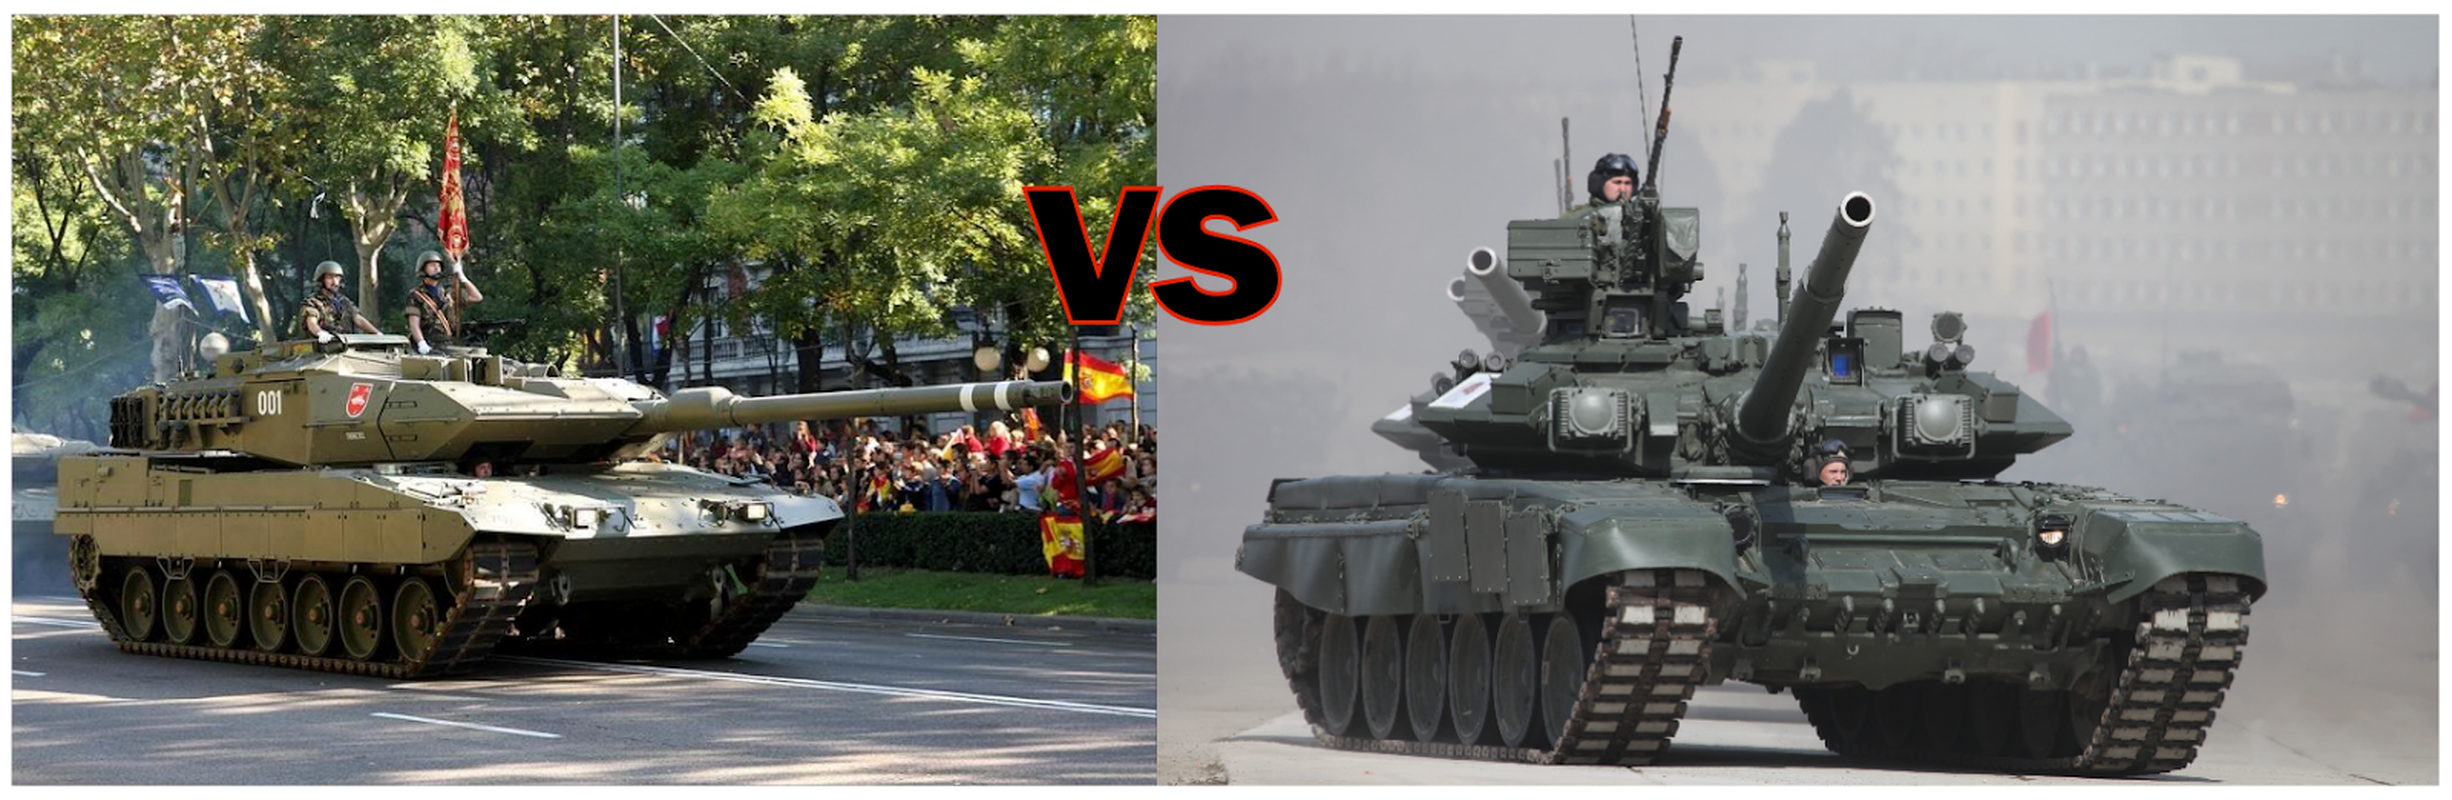 Sieu tang T-90M Proryv sap doi dau Leopard-2 tren chien truong Ukraine-Hinh-12